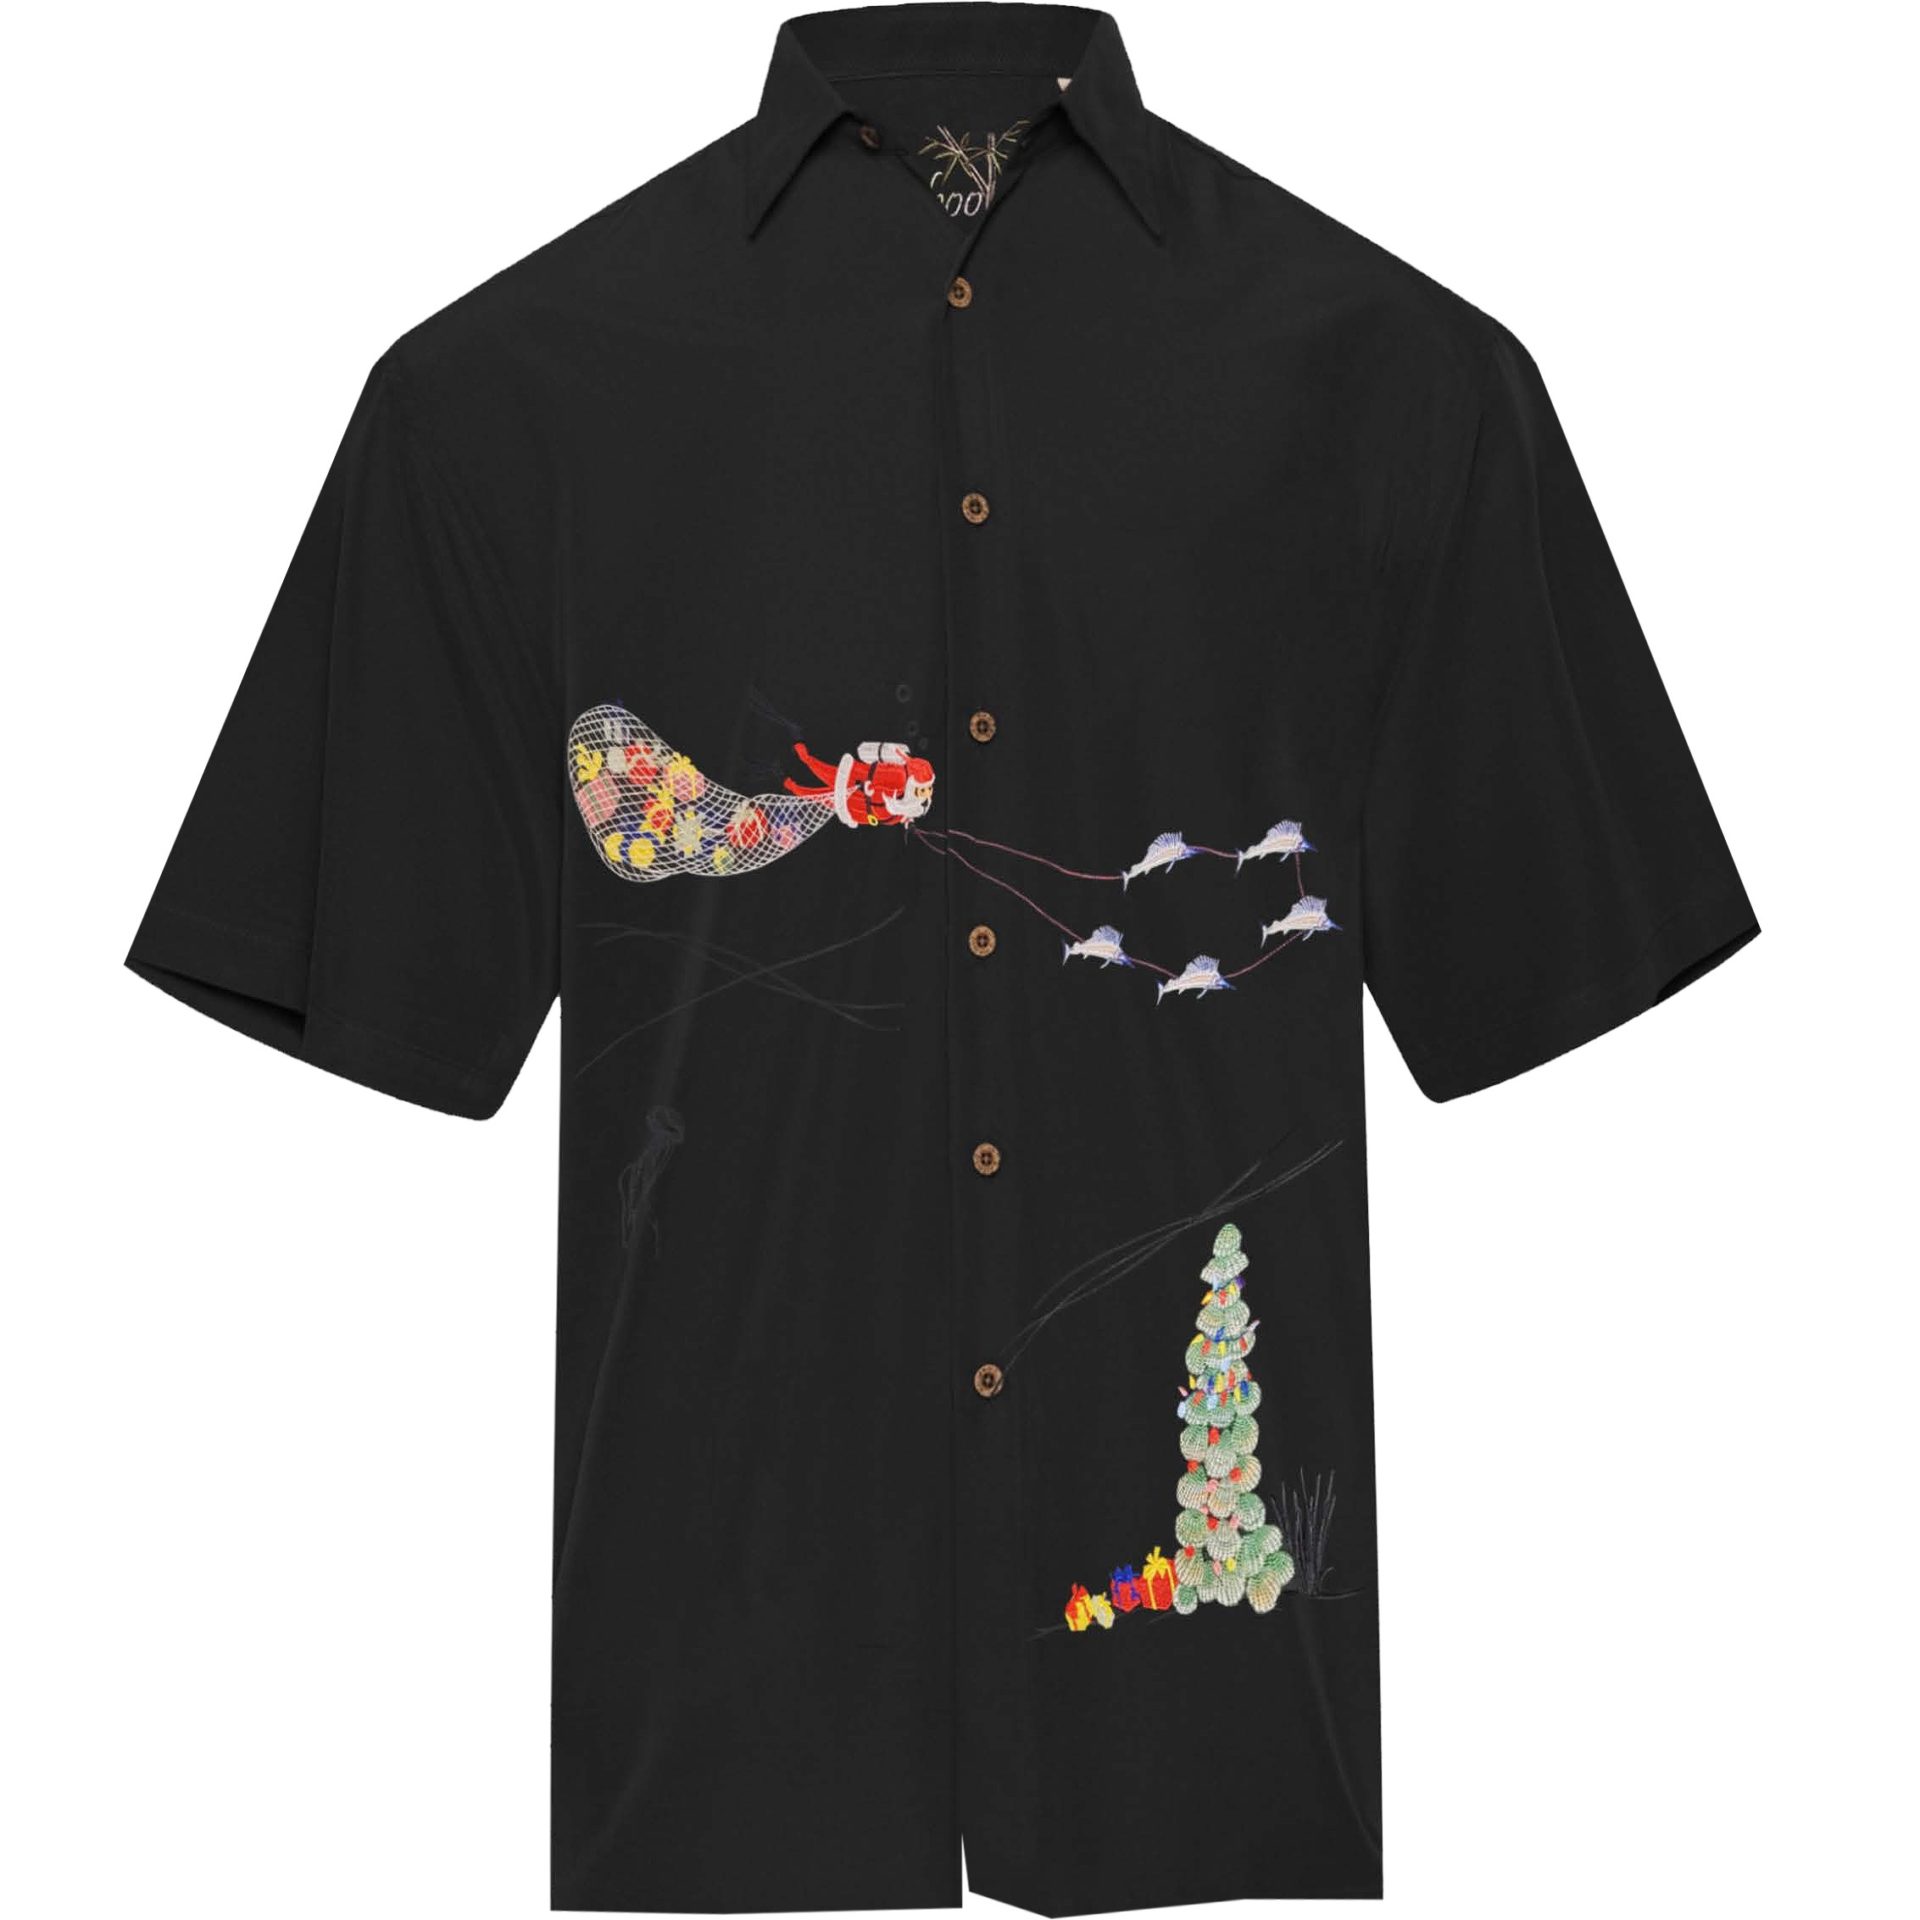 Bamboo-Cay-Mens-Christmas-Shirt-Scuba-Santa-Black